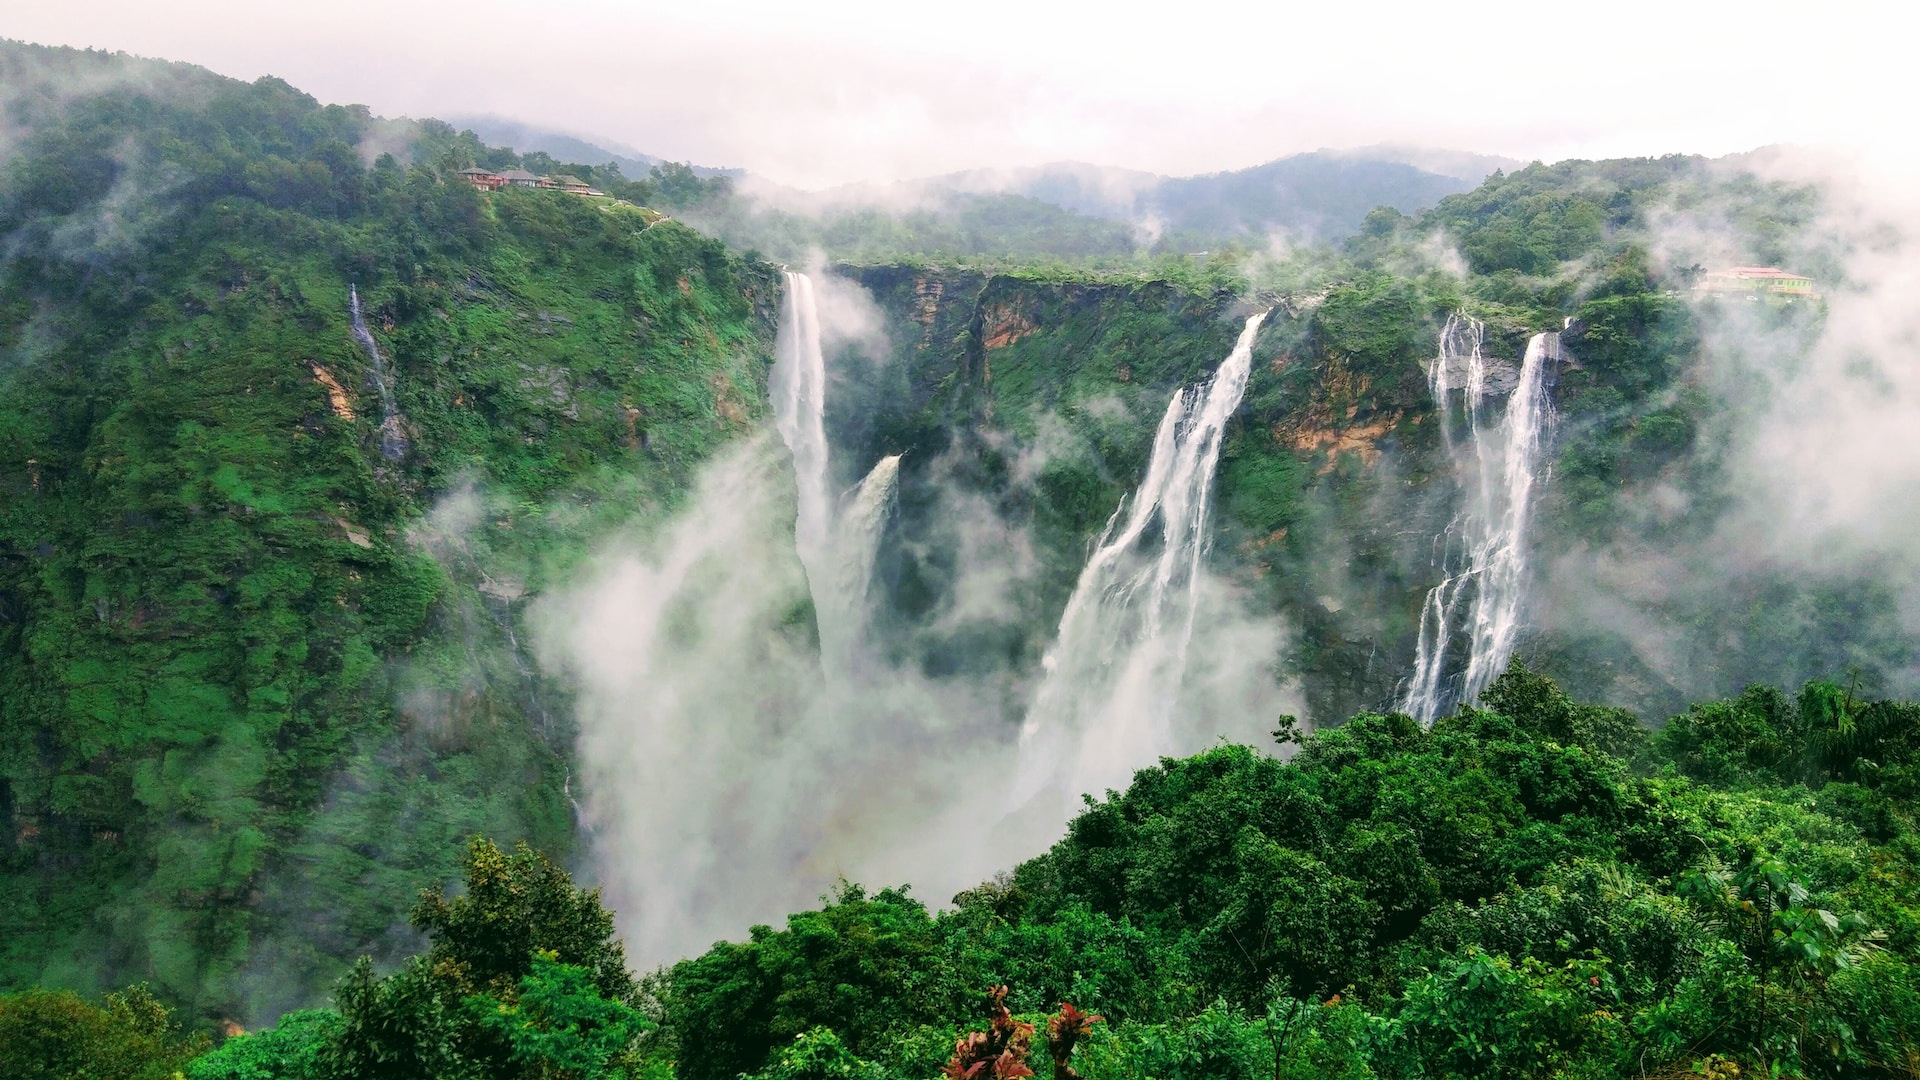 Kunchikal Falls